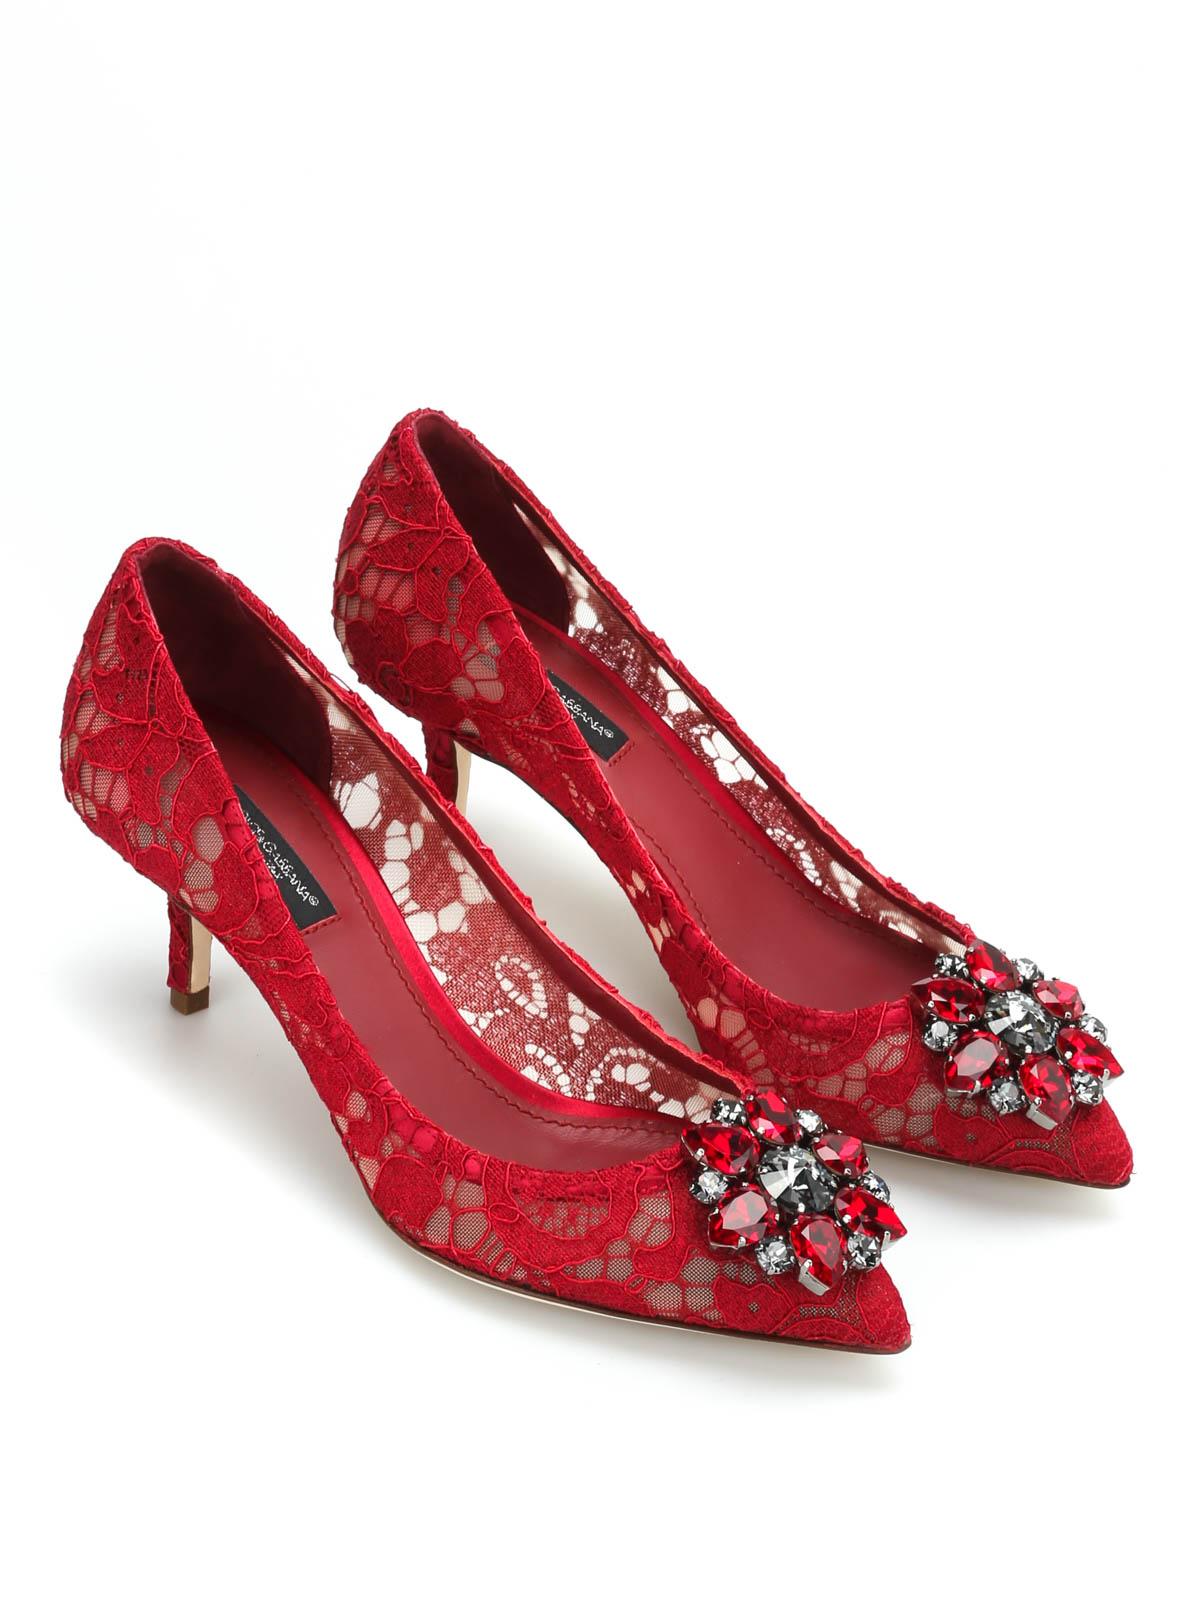 Dolce & Gabbana Bellucci Embellished Lace Pumps in Dark Red (Red